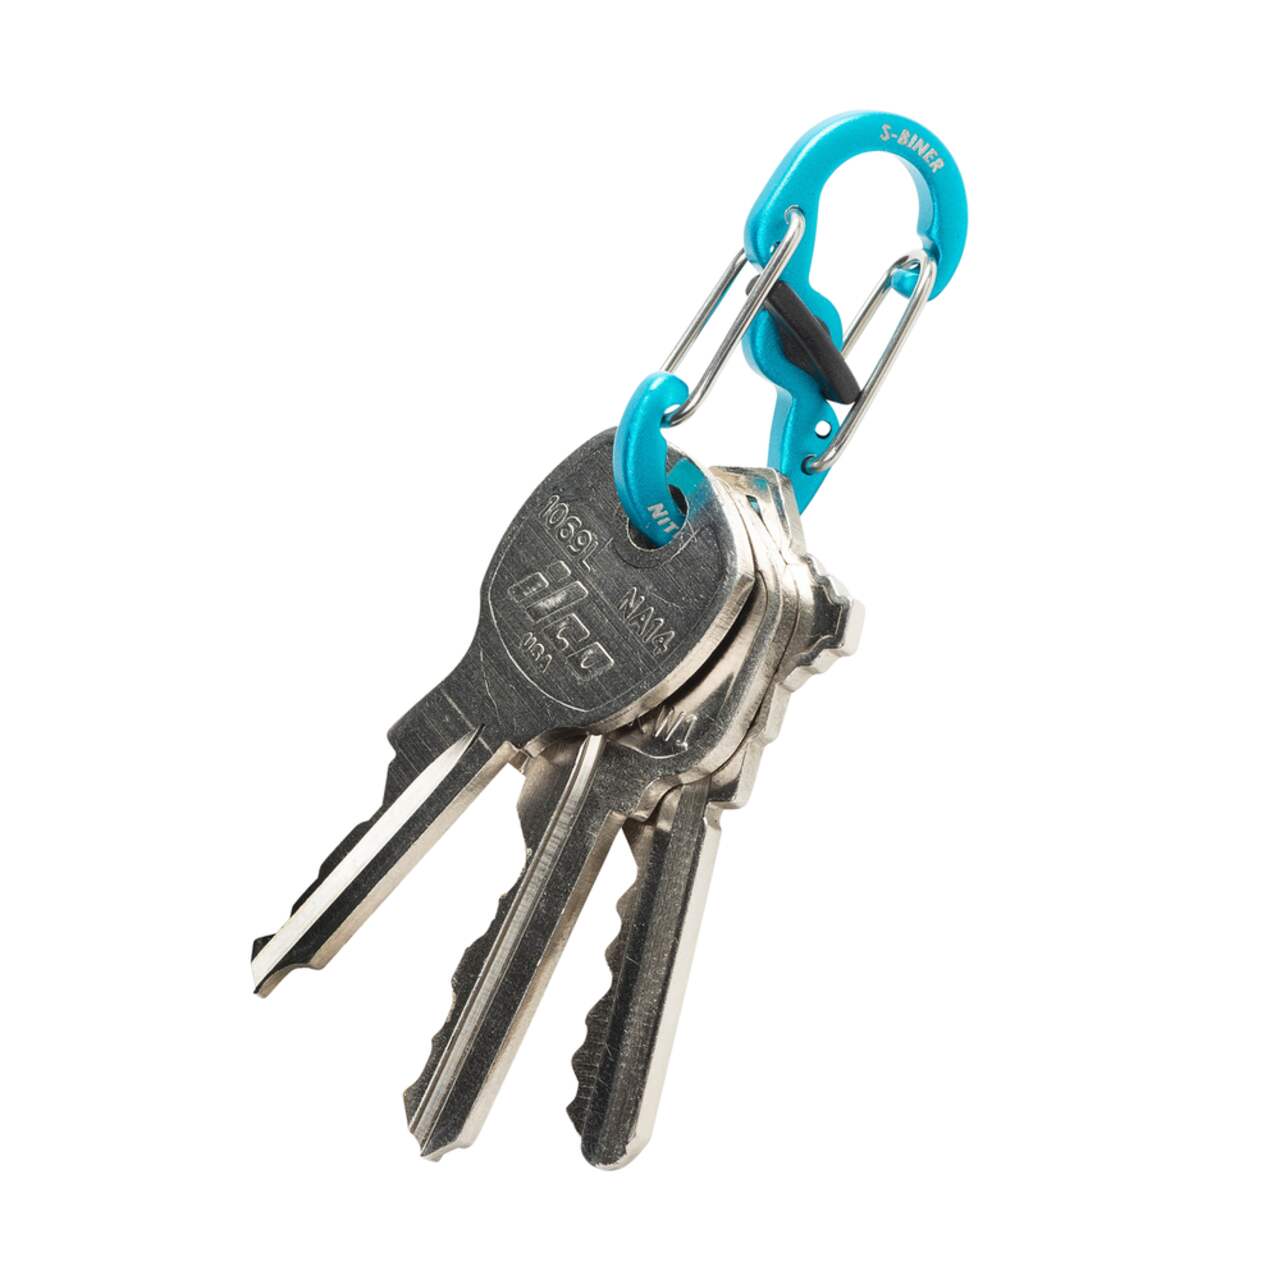 Porte-clé avec 6 mini mousquetons S-Biner MicroLock